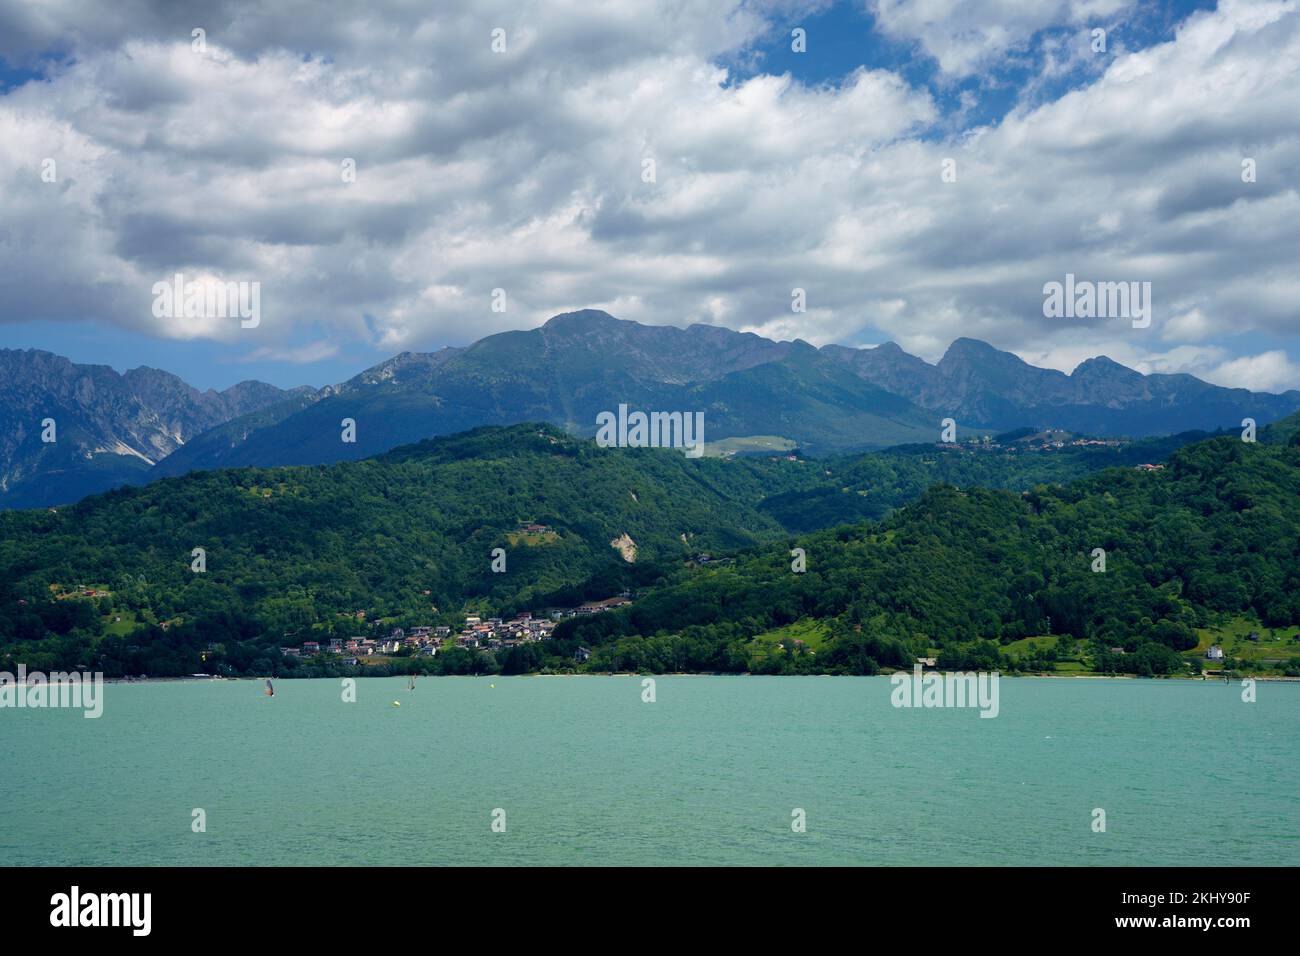 Lake of Santa Croce in Belluno province, Veneto, Italy, at summer Stock Photo